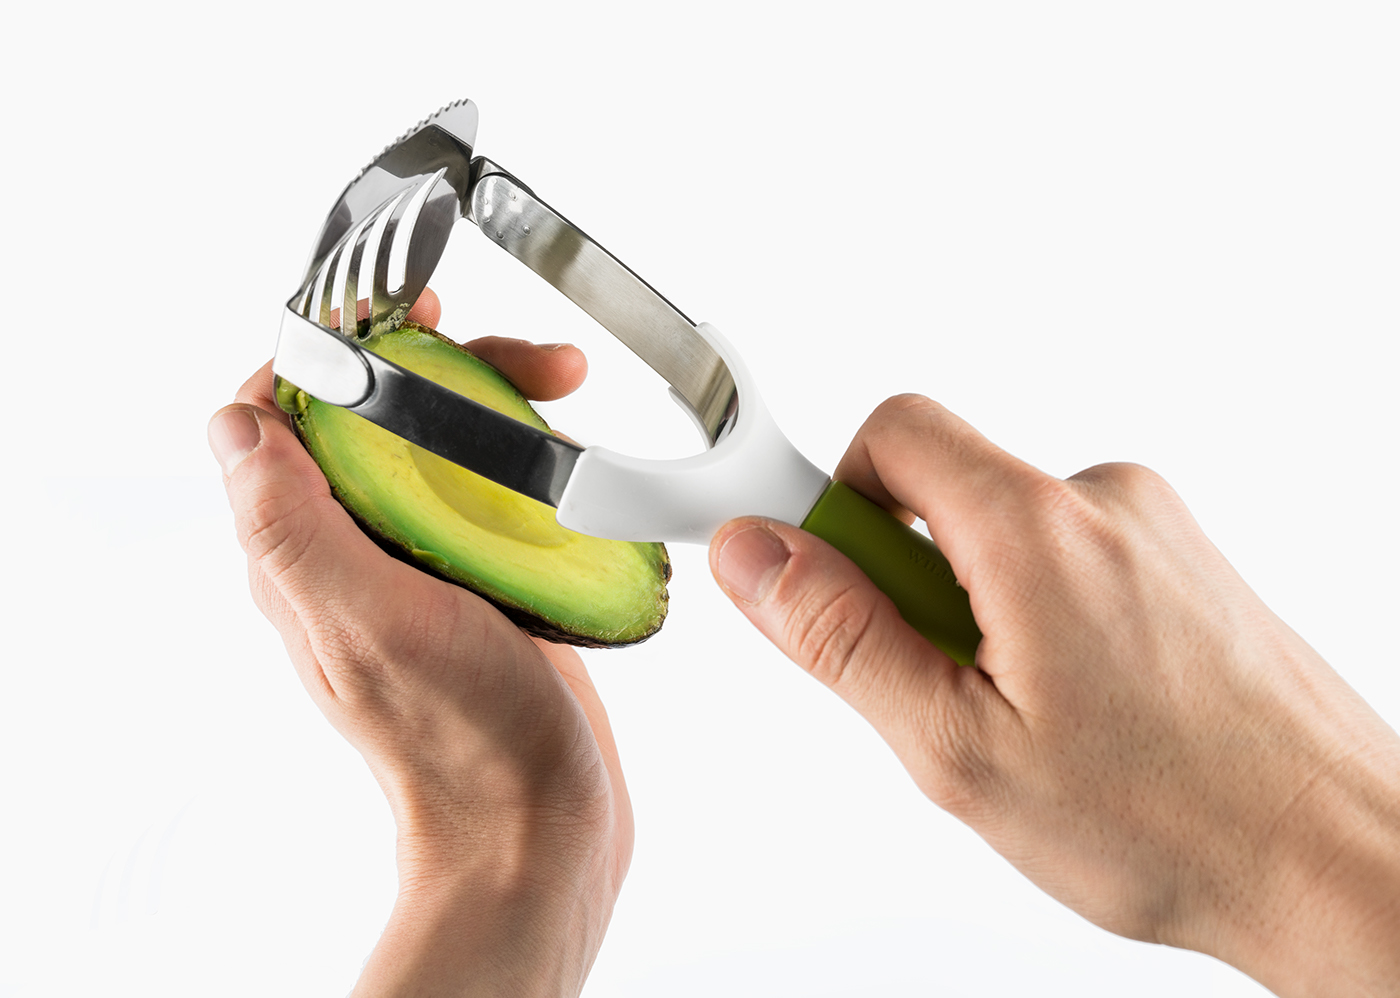 design product kitchen design housewares design avocado Williams-Sonoma